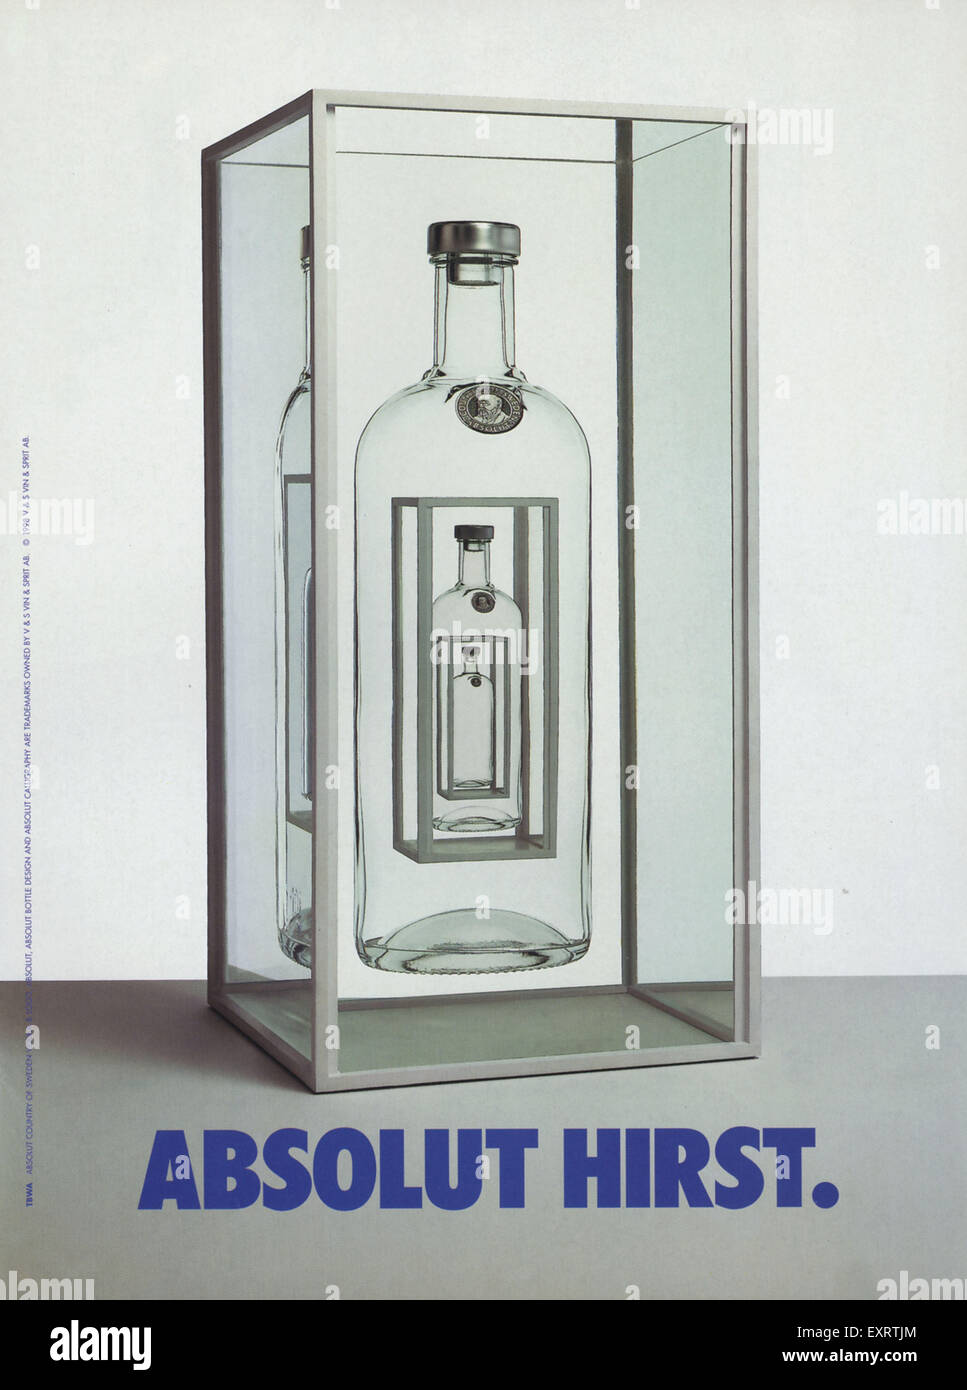 1990s USA Absolut Magazine Advert Stock Photo